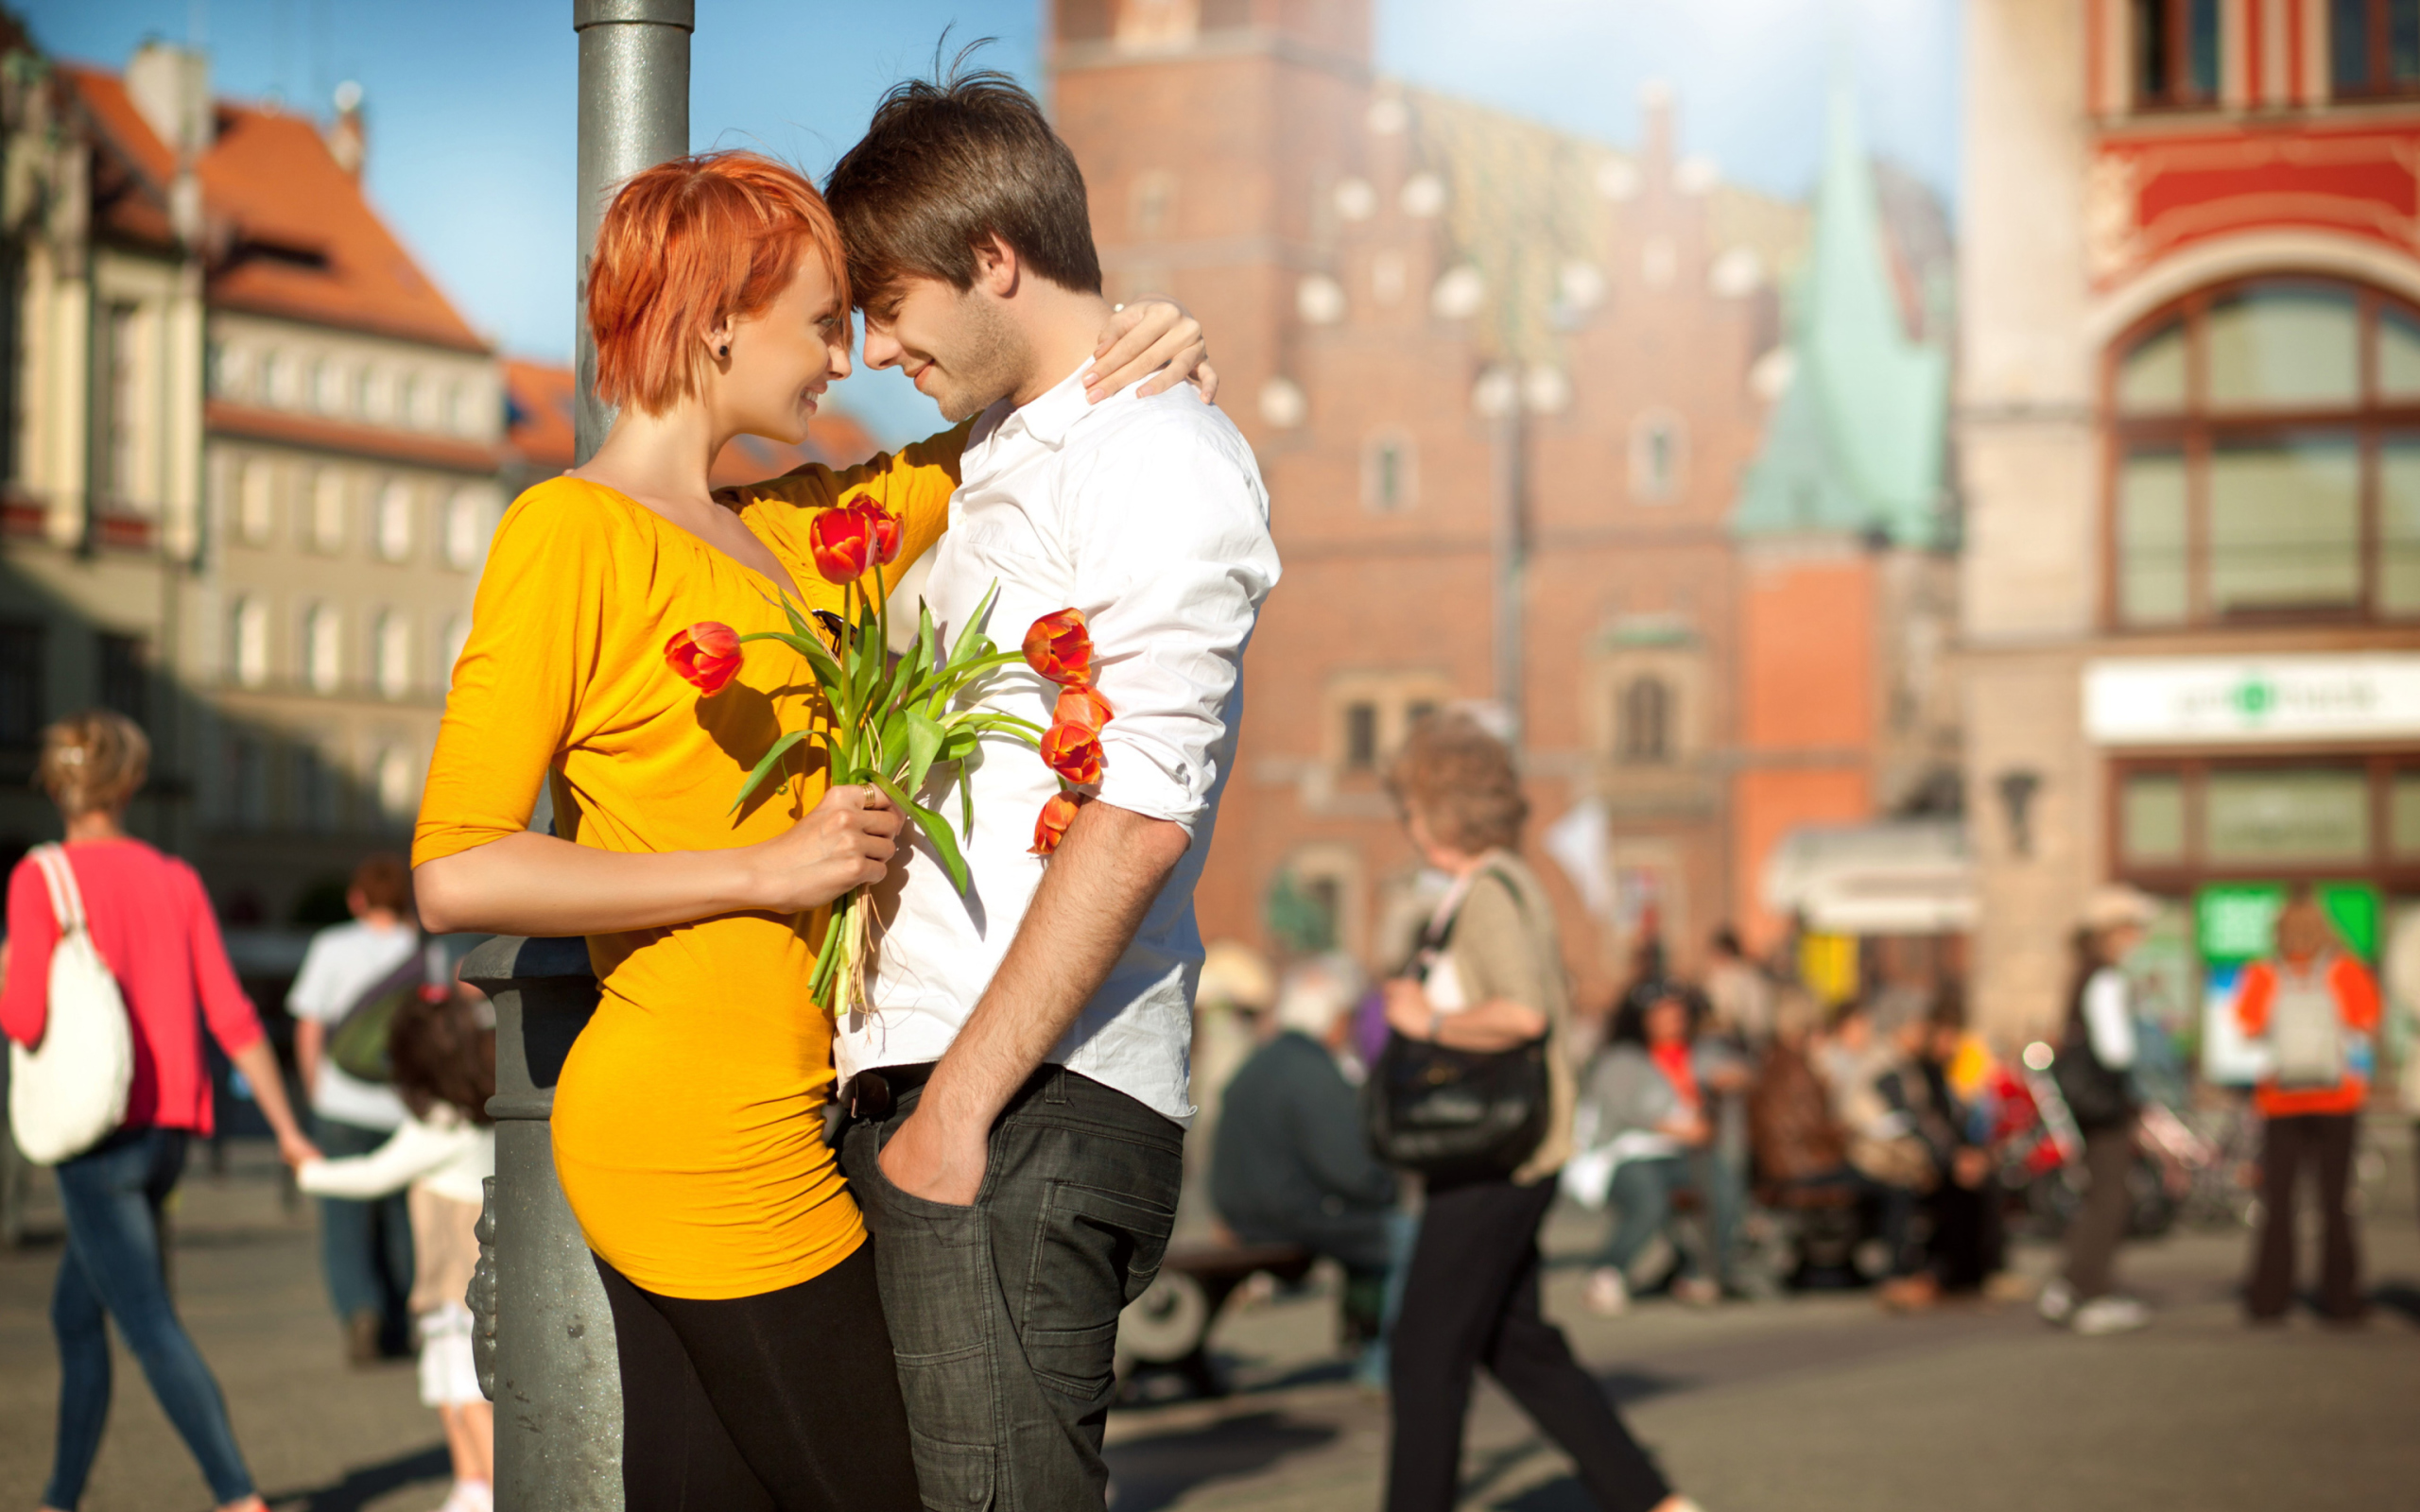 Romantic Date In The City wallpaper 2560x1600